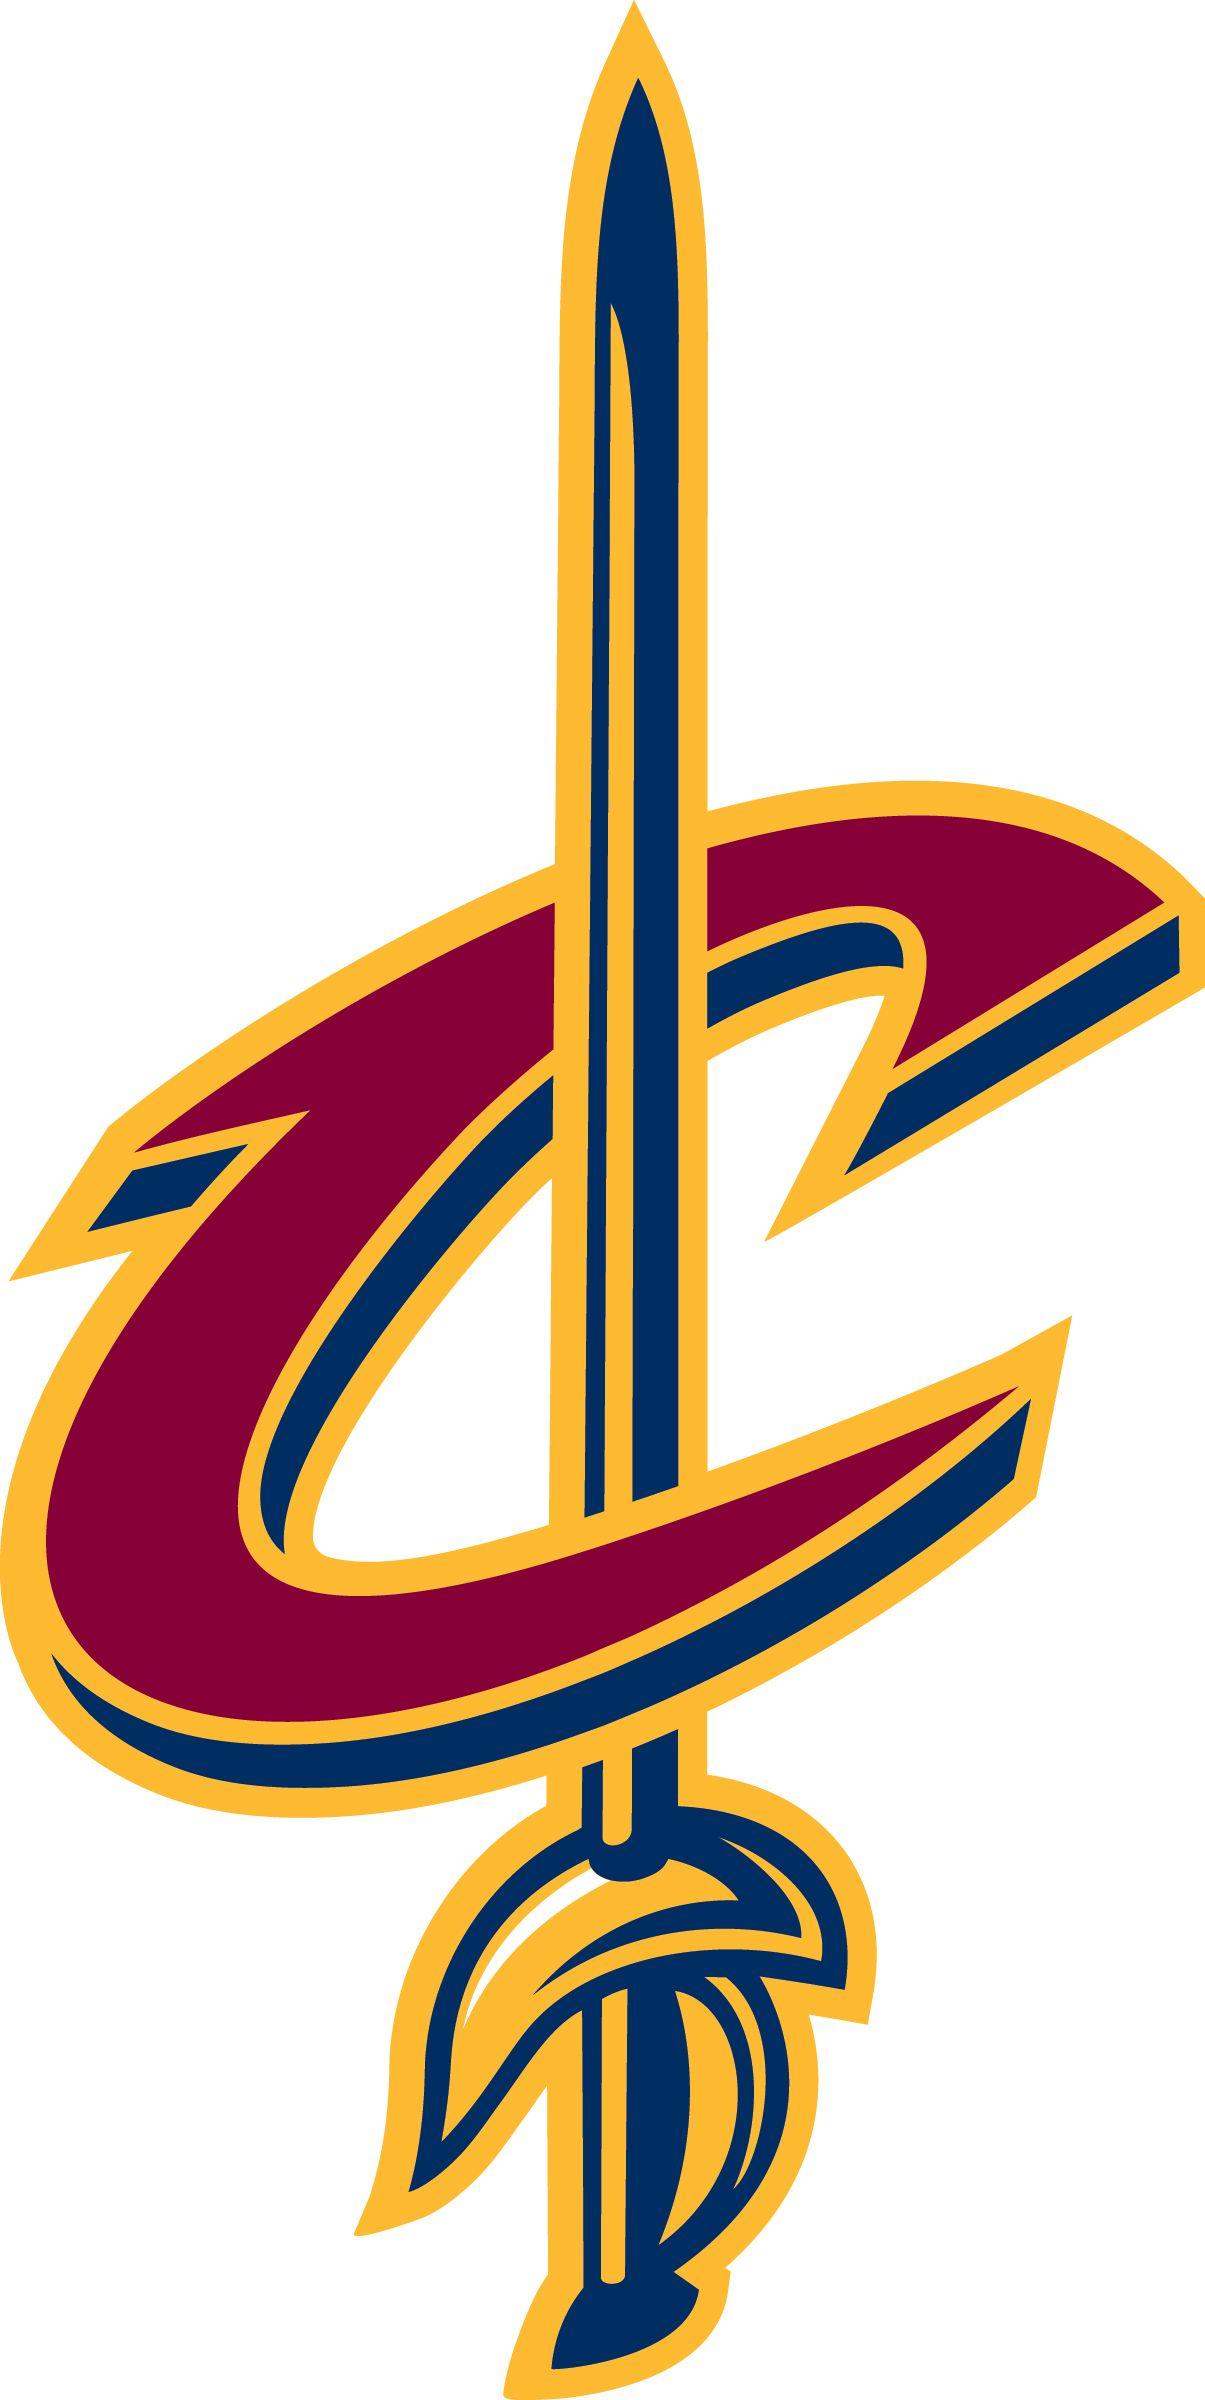 Cleveland Logo - Image result for cleveland cavaliers logo | Sports logos | Logos ...